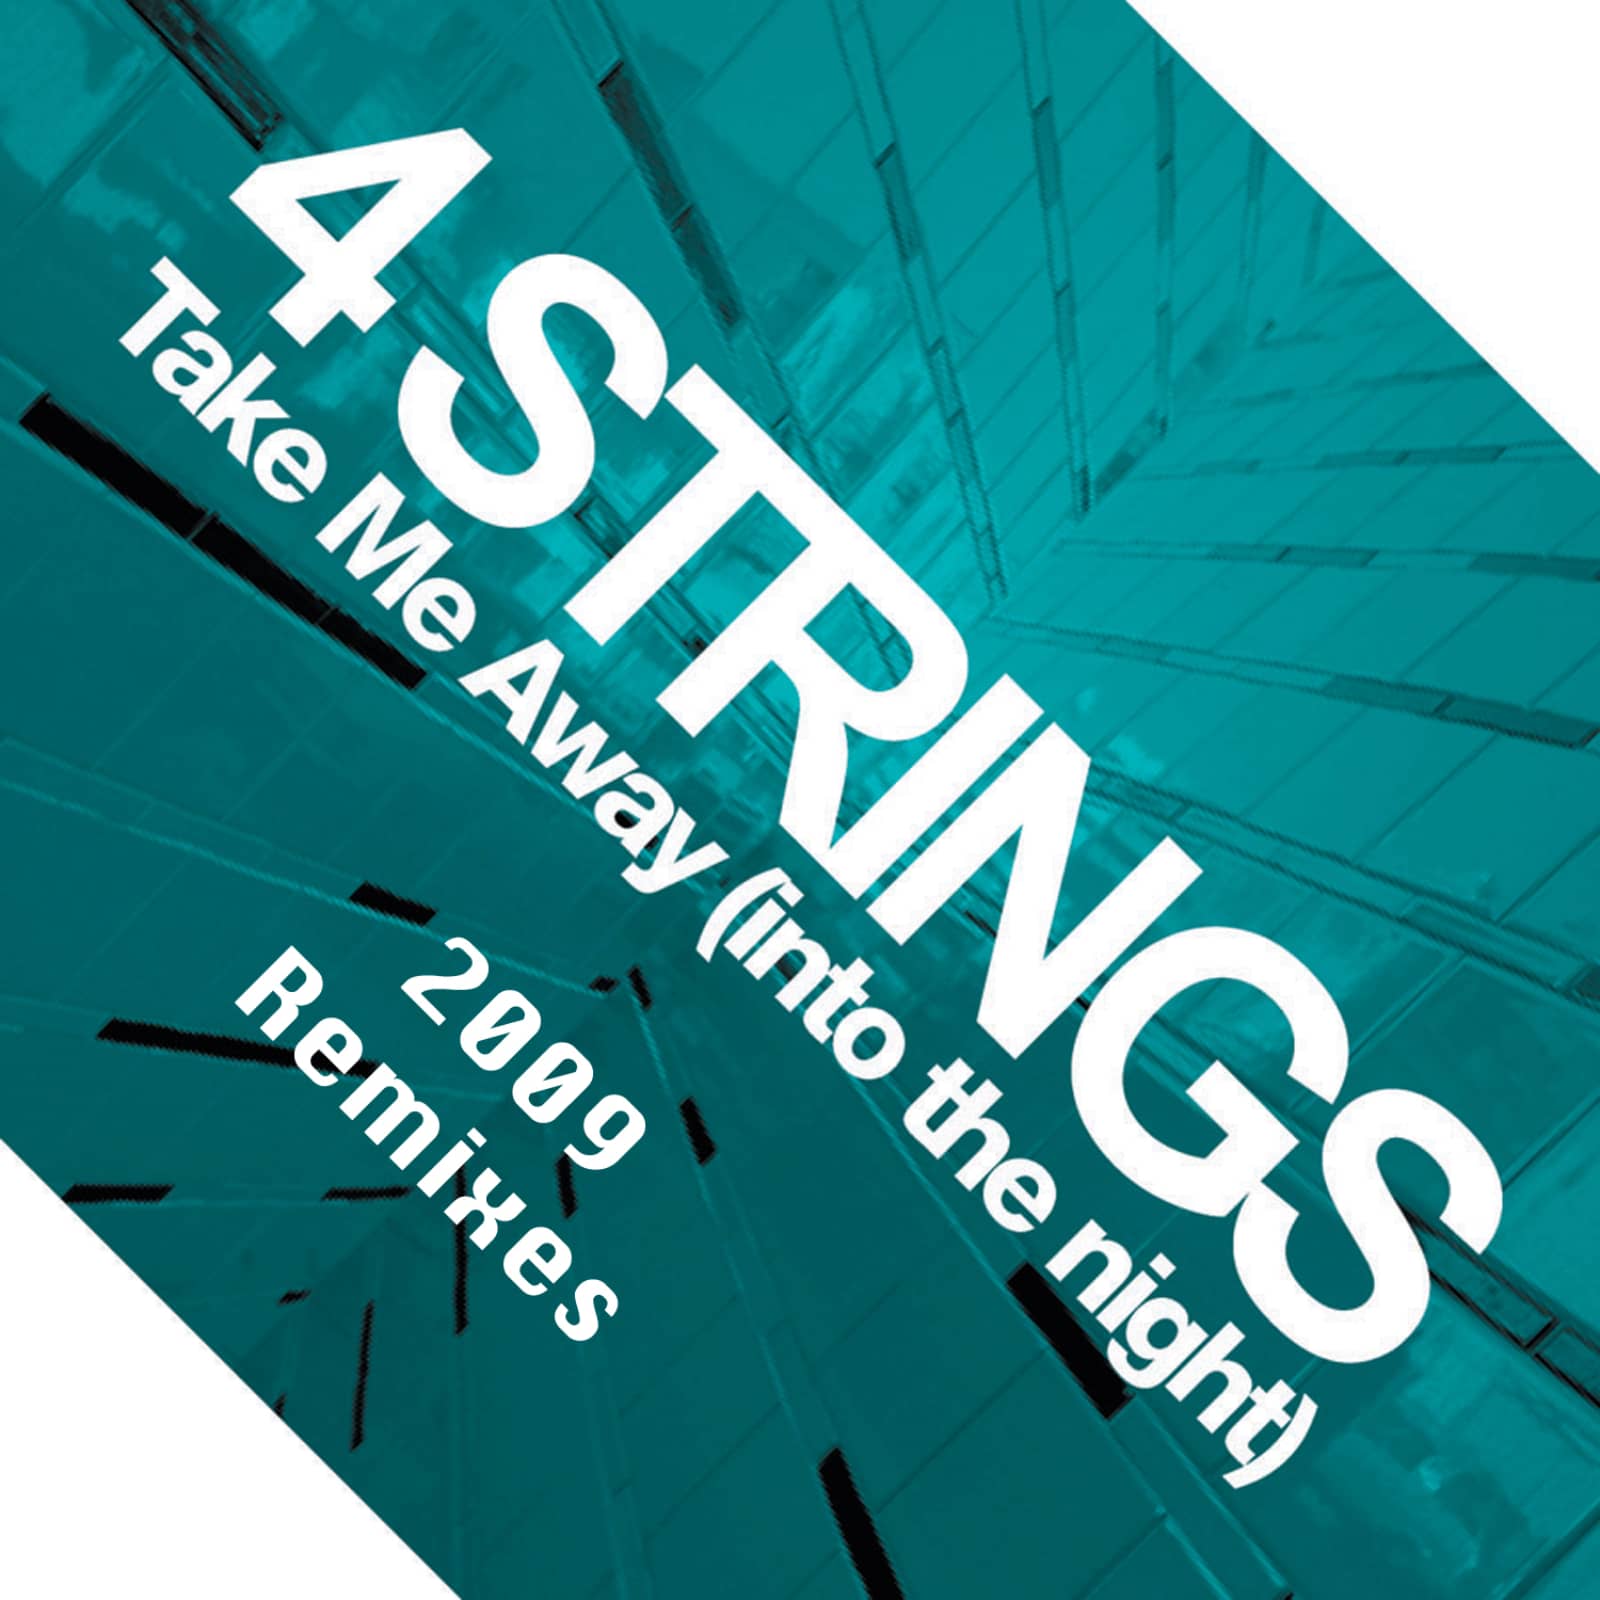 First away. 4 Strings - take me away (into the Night). 4 Strings. Группа 4 Strings. 4 Strings - into the Night (Original Mix).